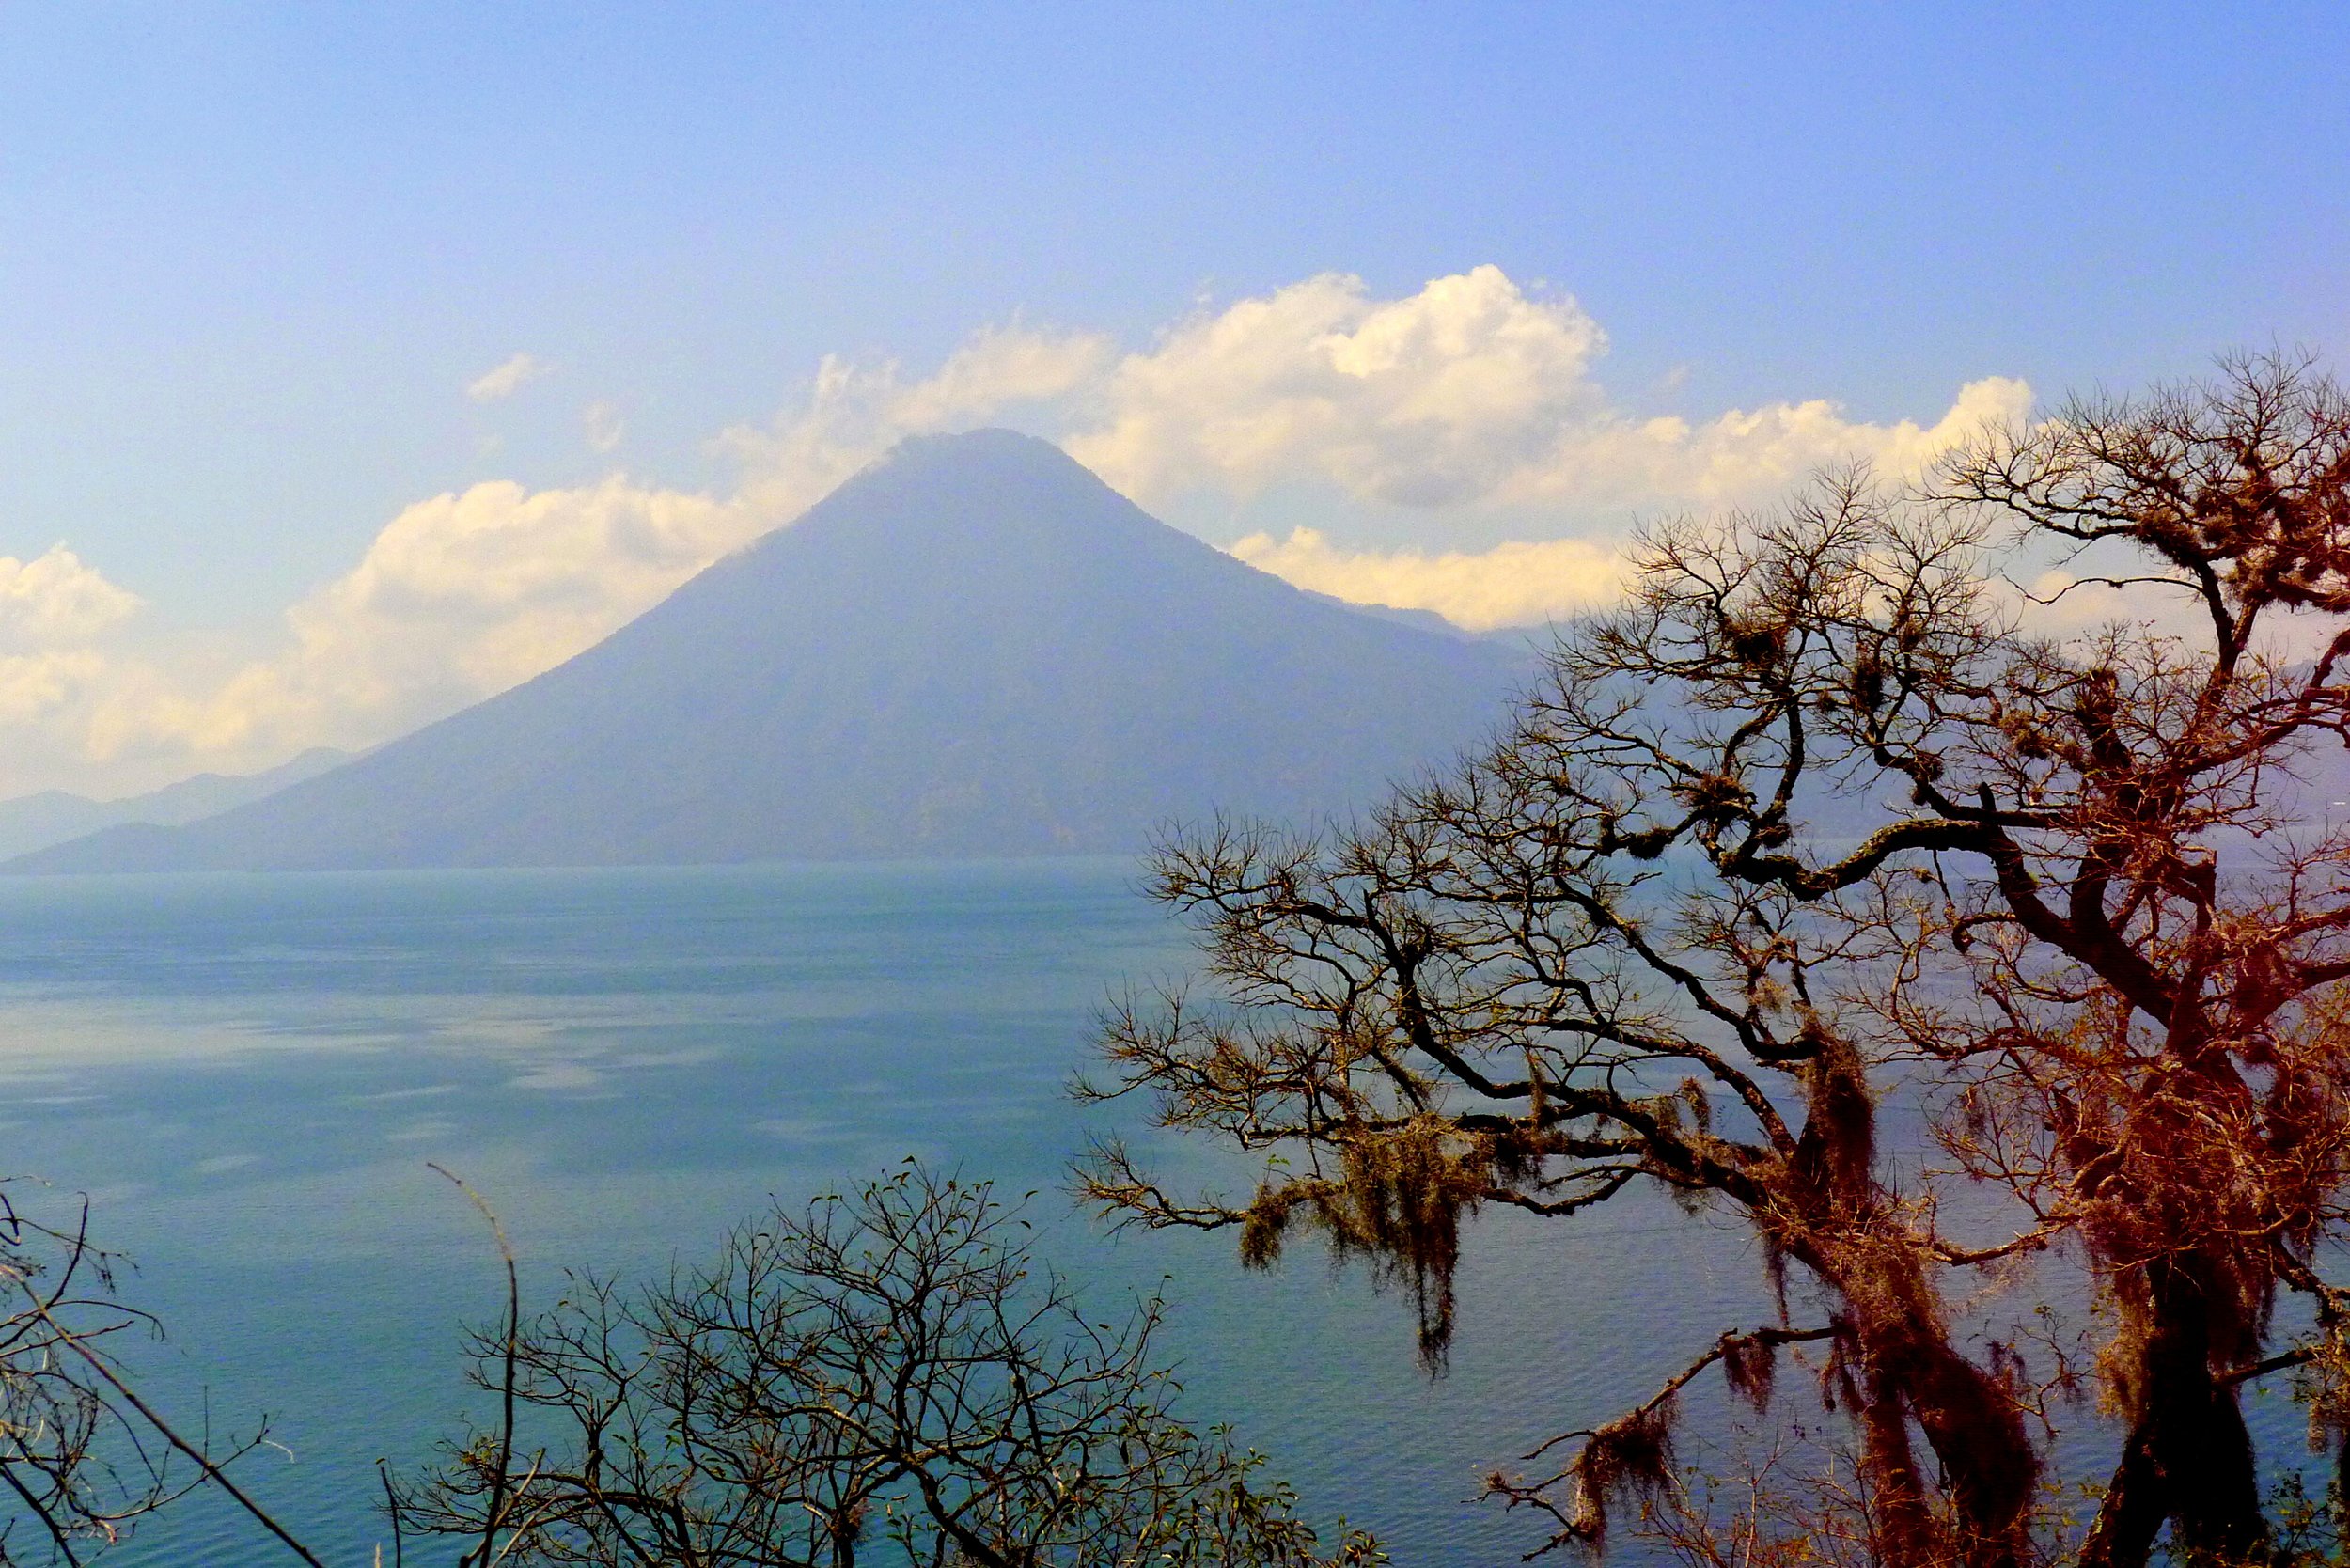 Guatemala Hotels | The Laguna Lodge Eco-Resort and Nature Reserve